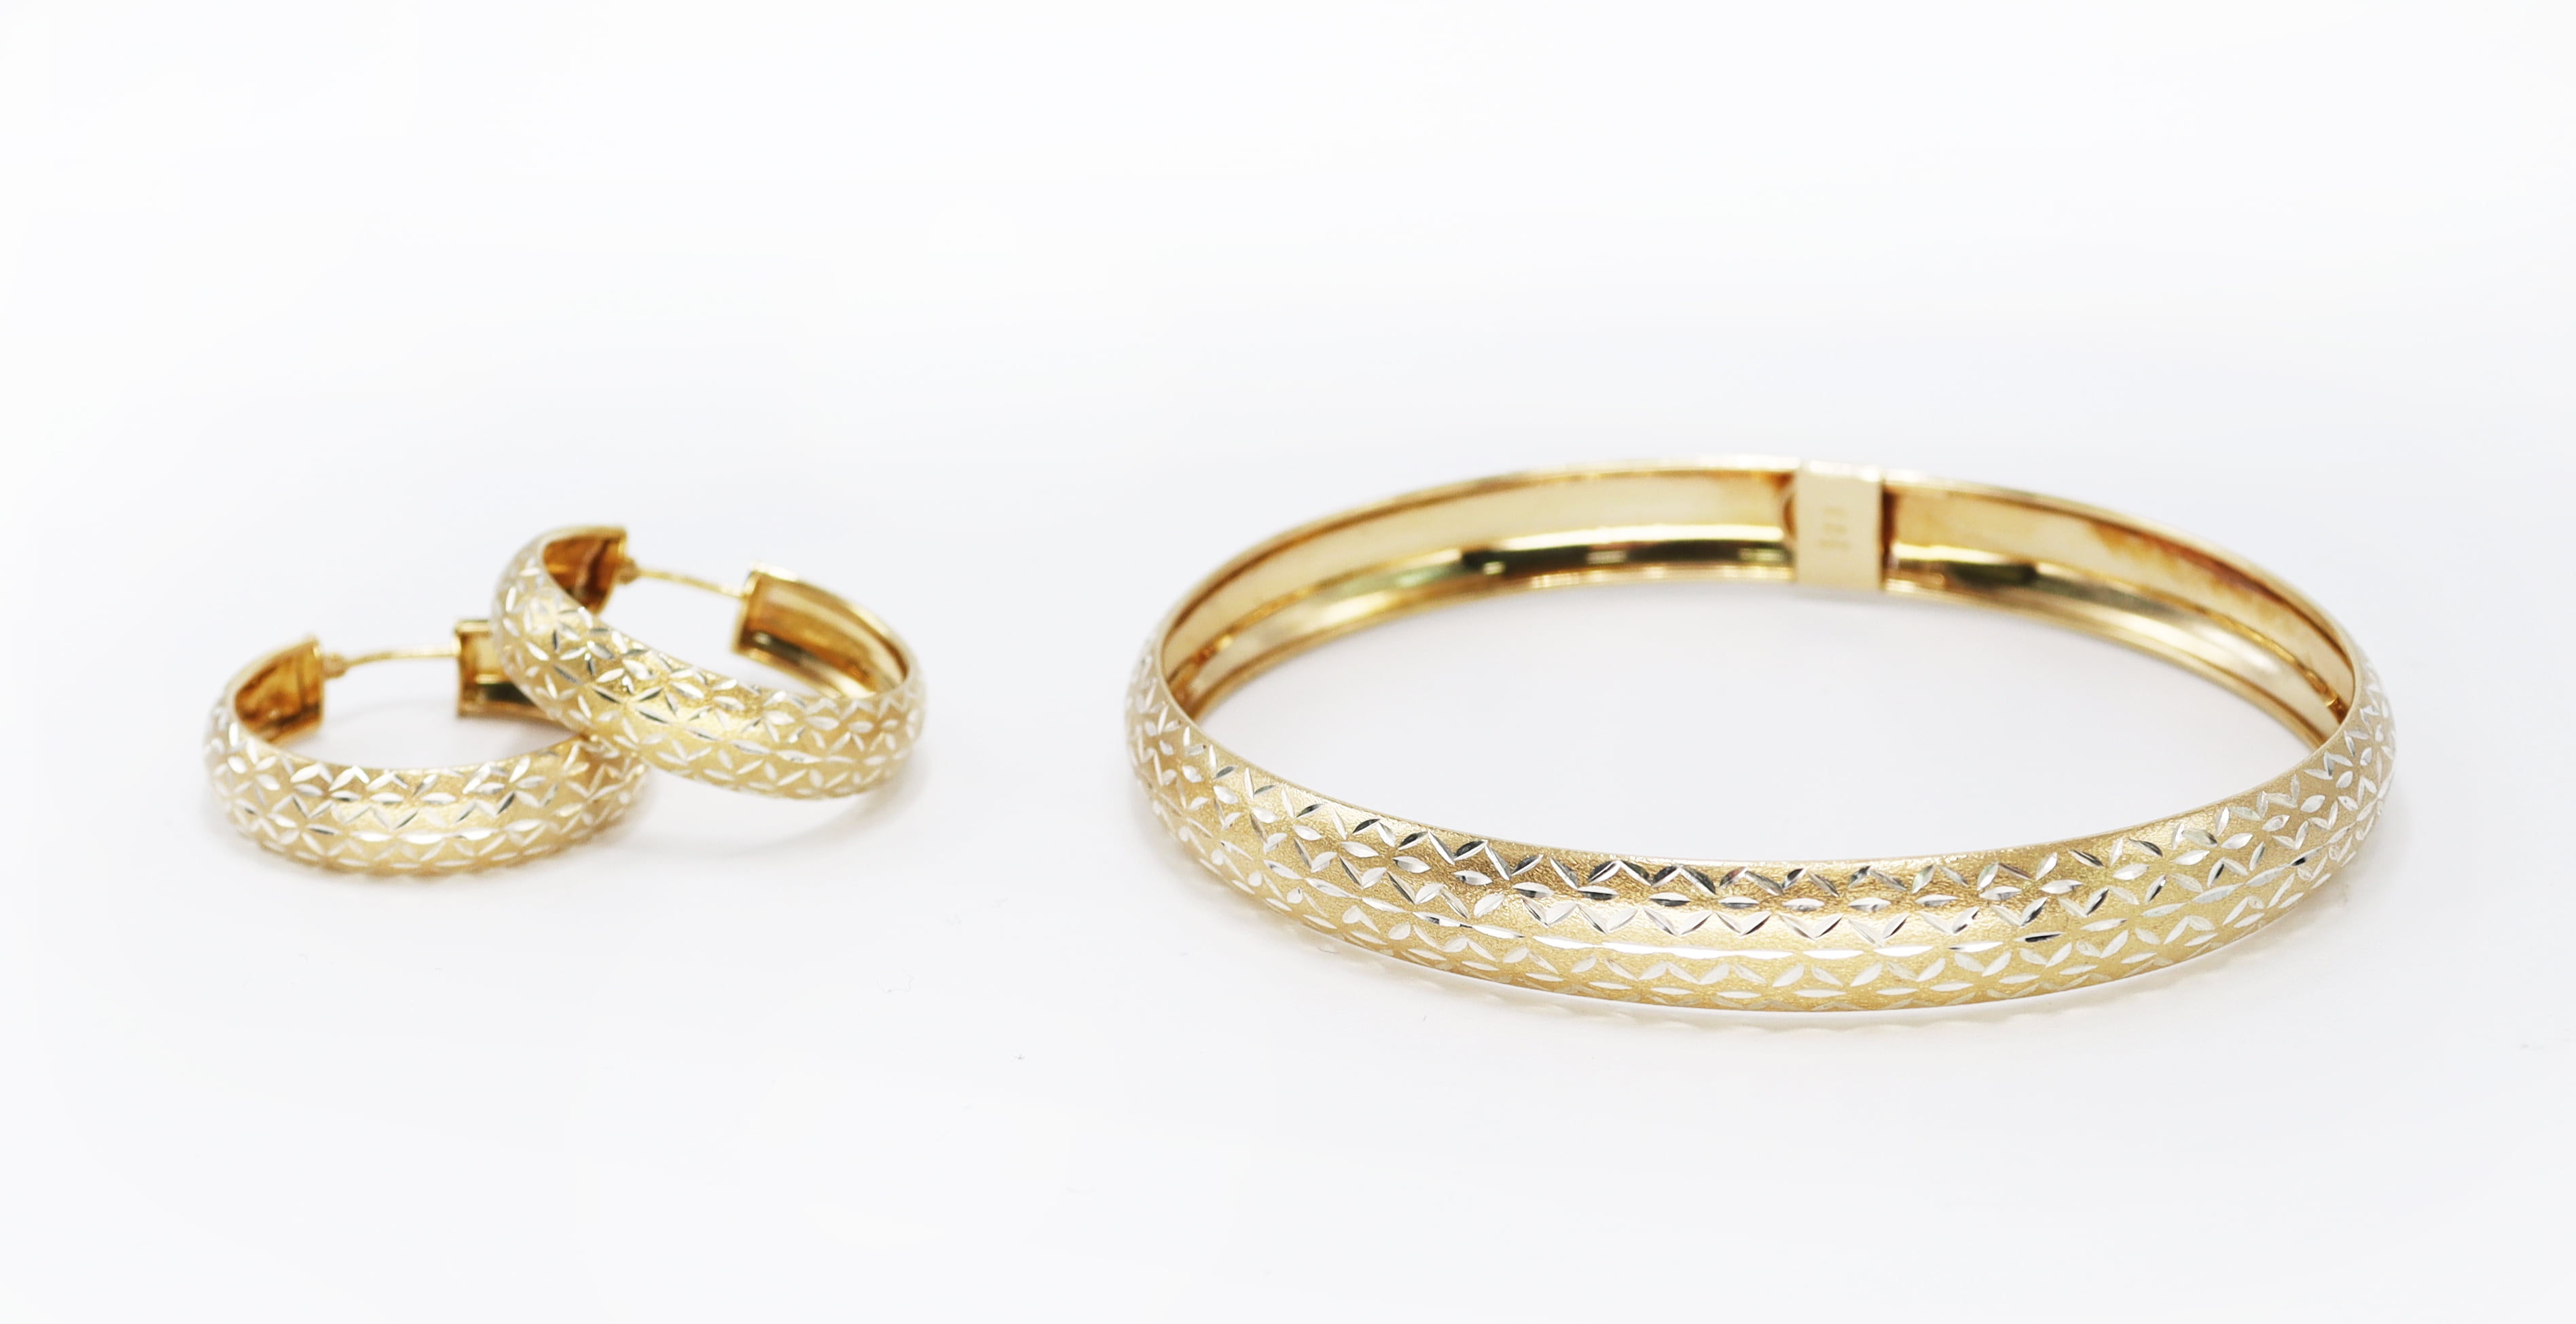 Luxury Ladies Circle Bracelets Bangles Accessories Present O-W 4 Piece 18K Gold Pated Women Bangle Jewelry